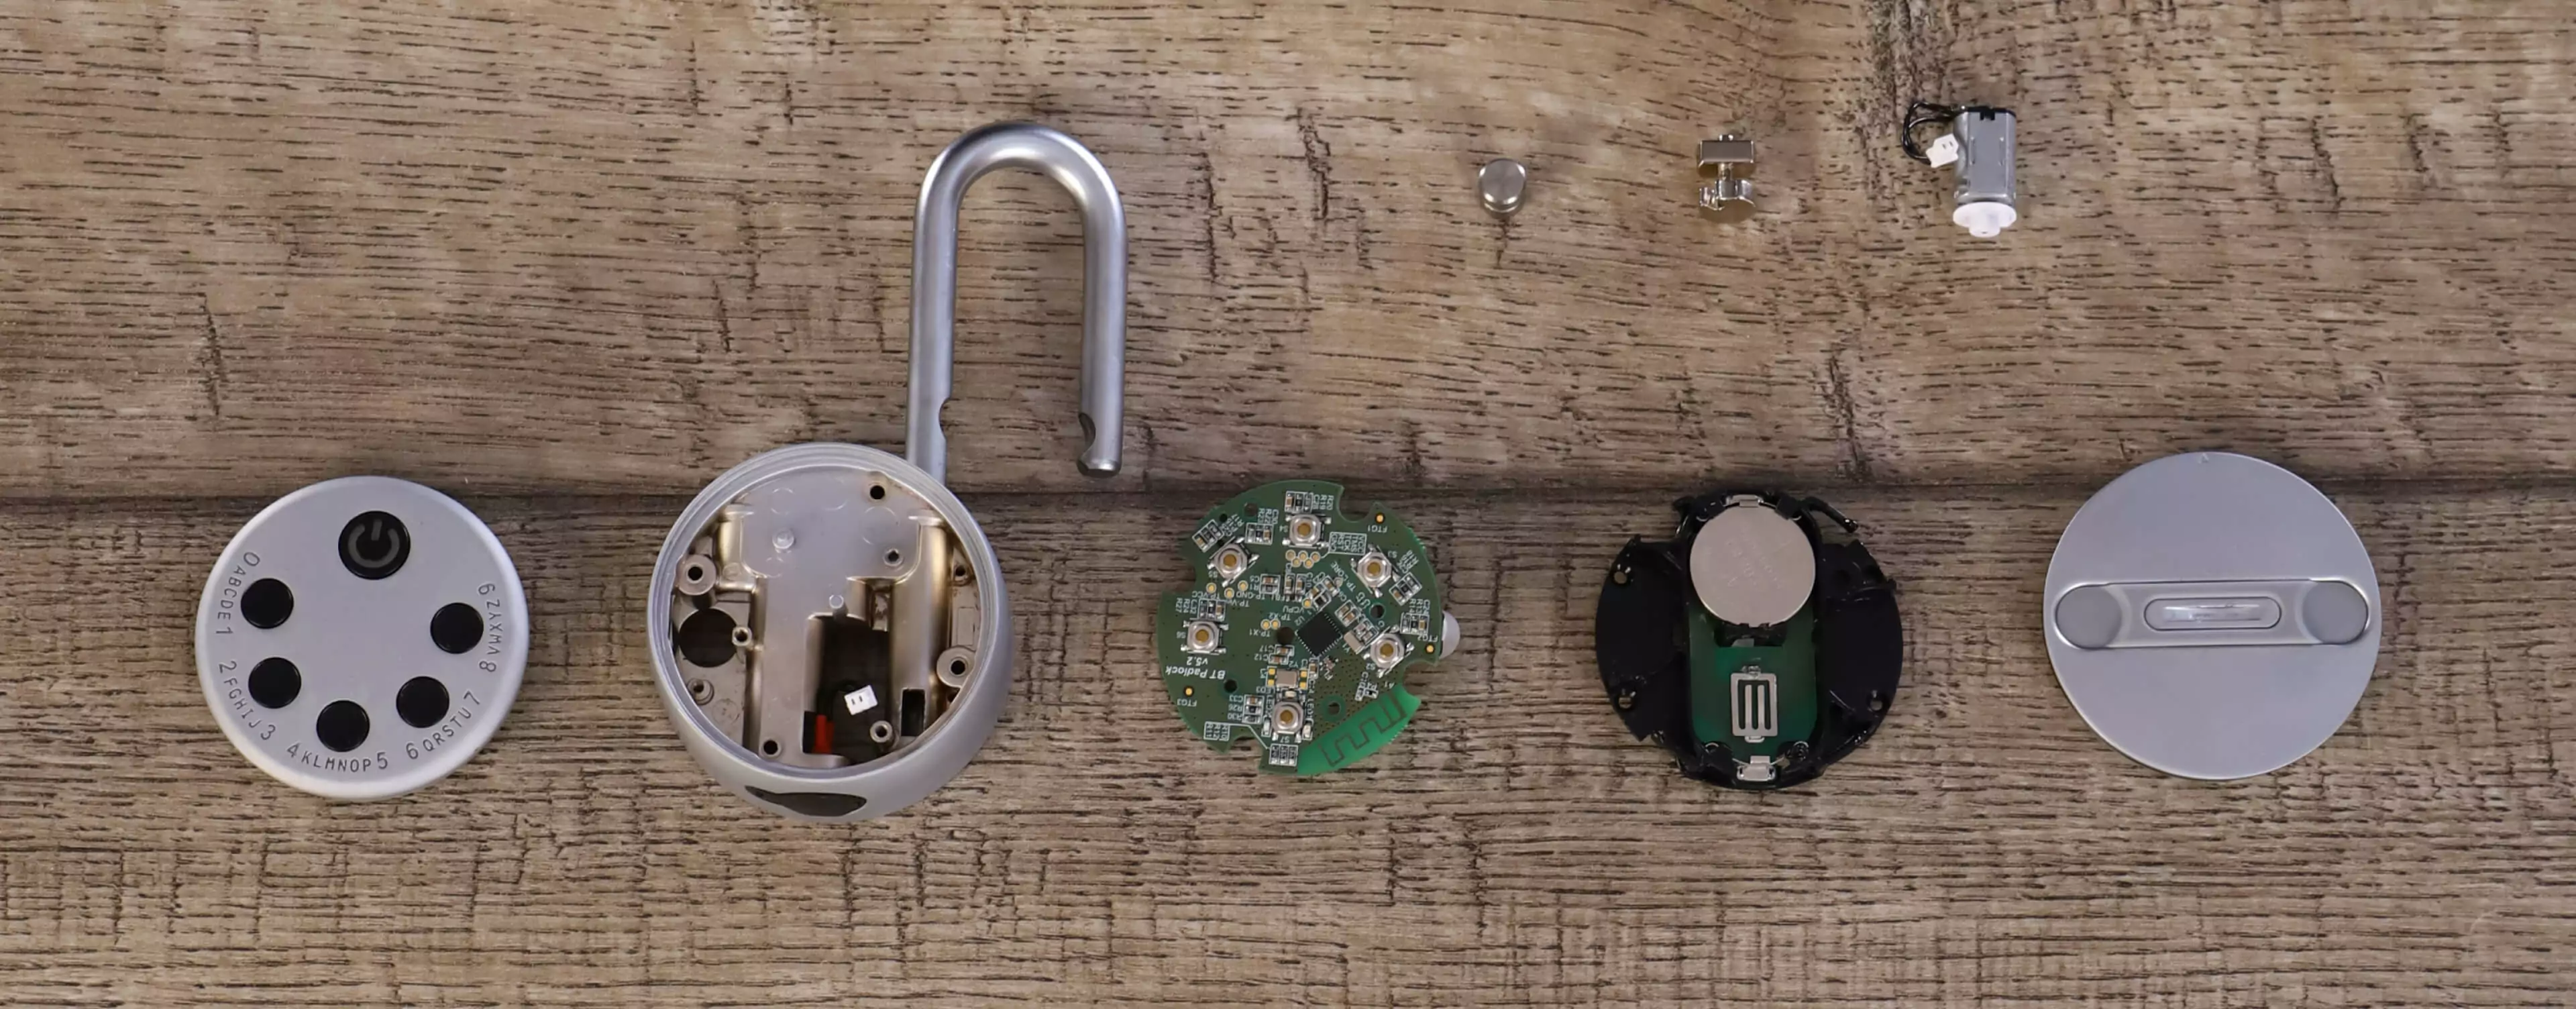 Bluetooth Smart Lock PROTOTYPING